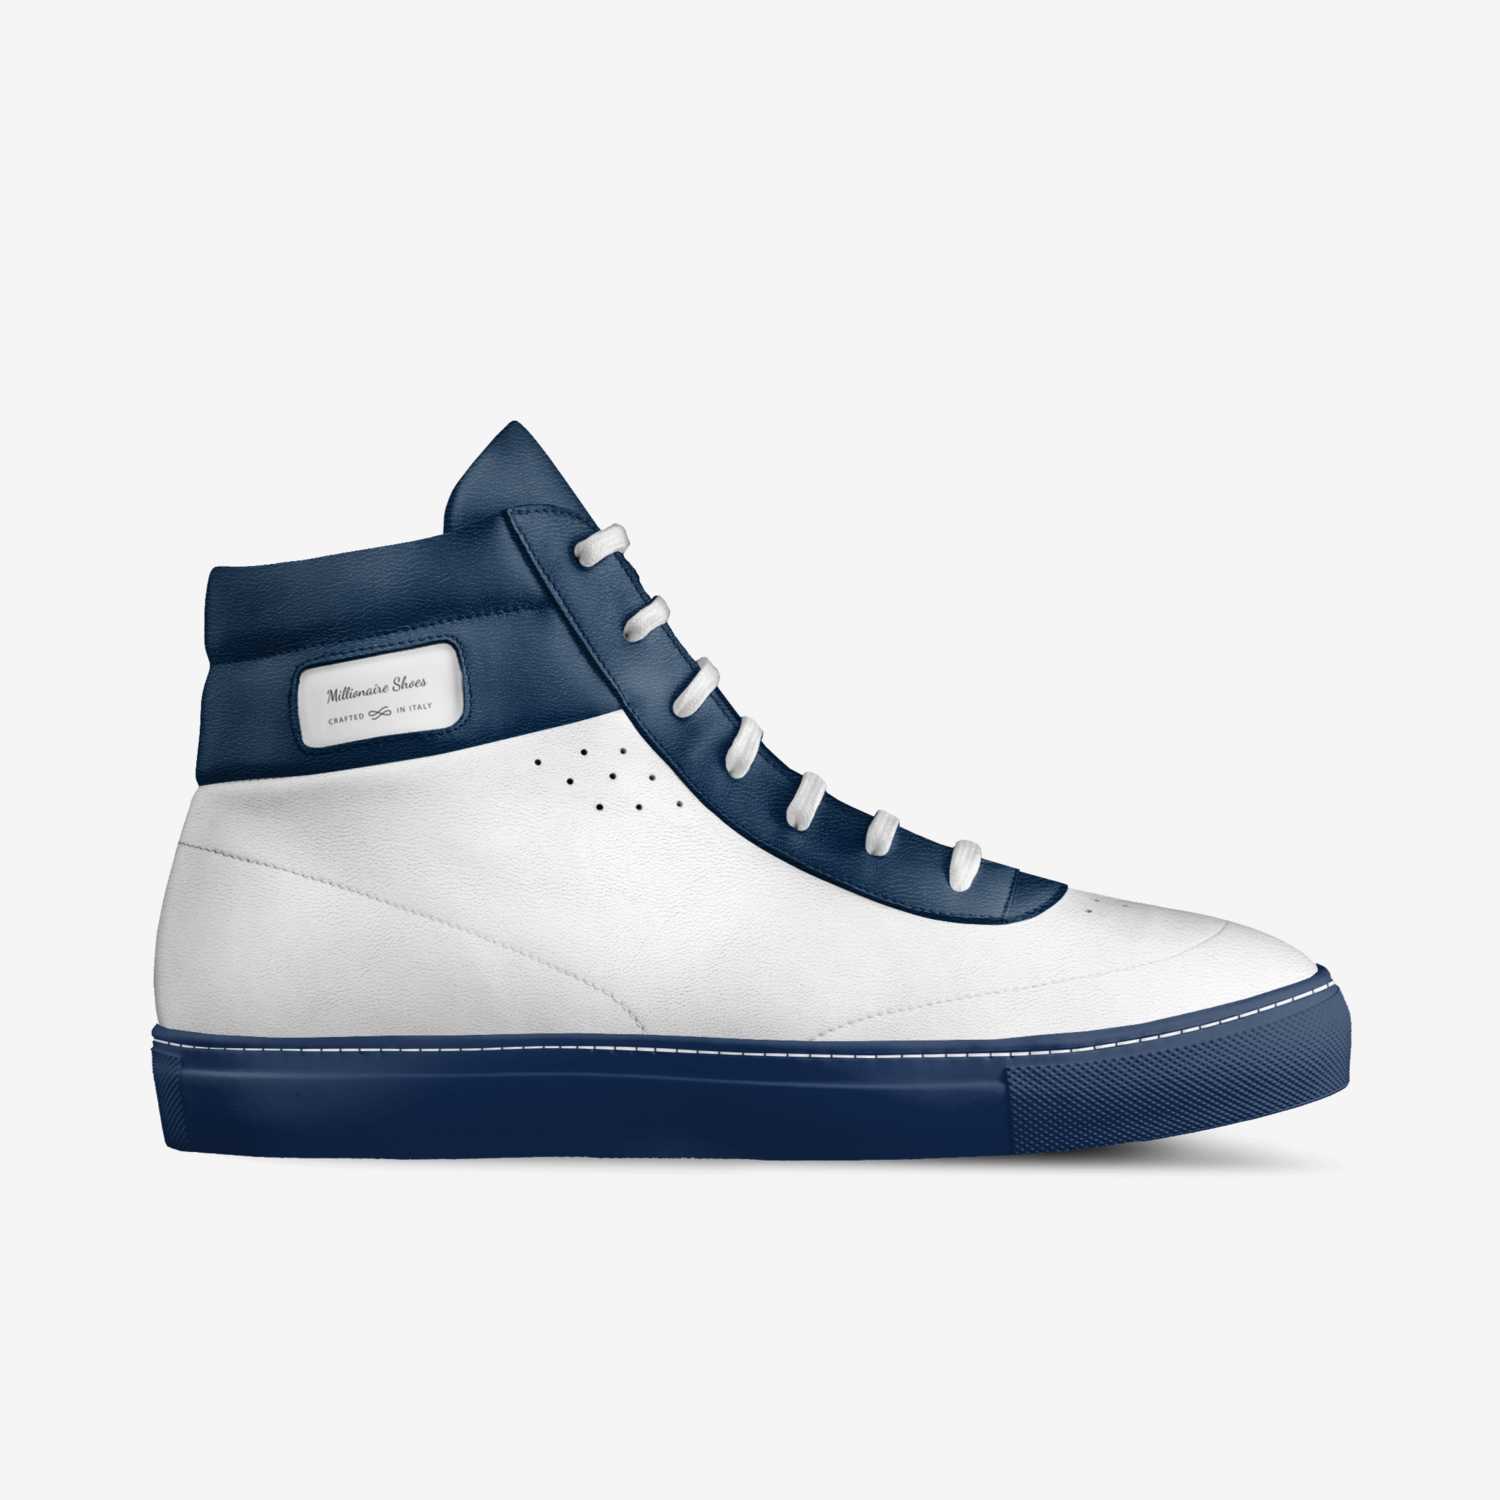 Millionaire Shoes | A Custom Shoe concept by Andre Majors